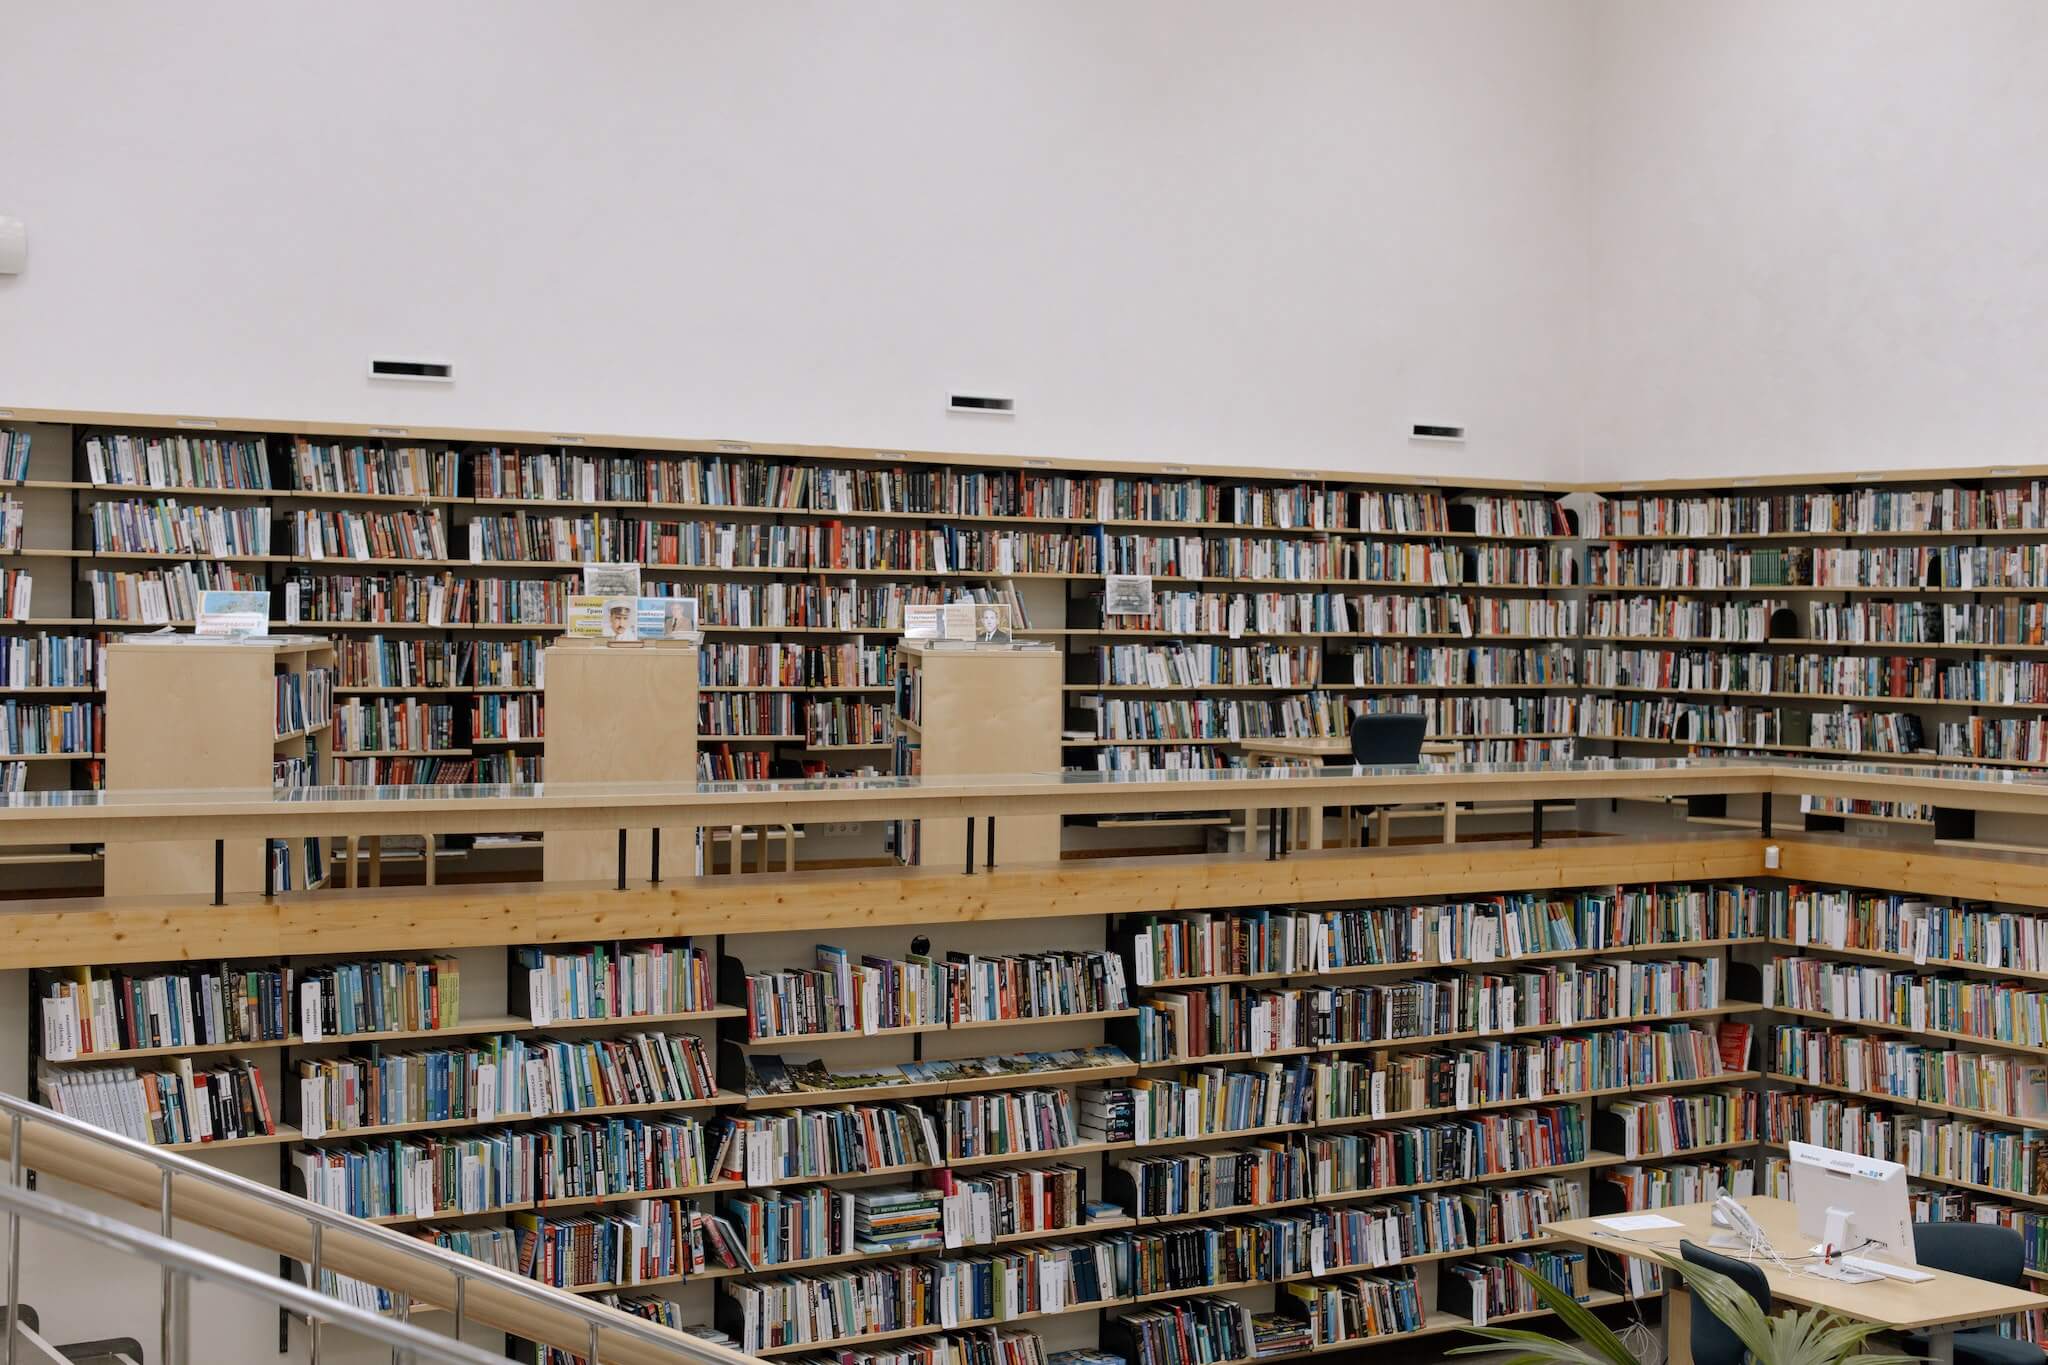 Xz library